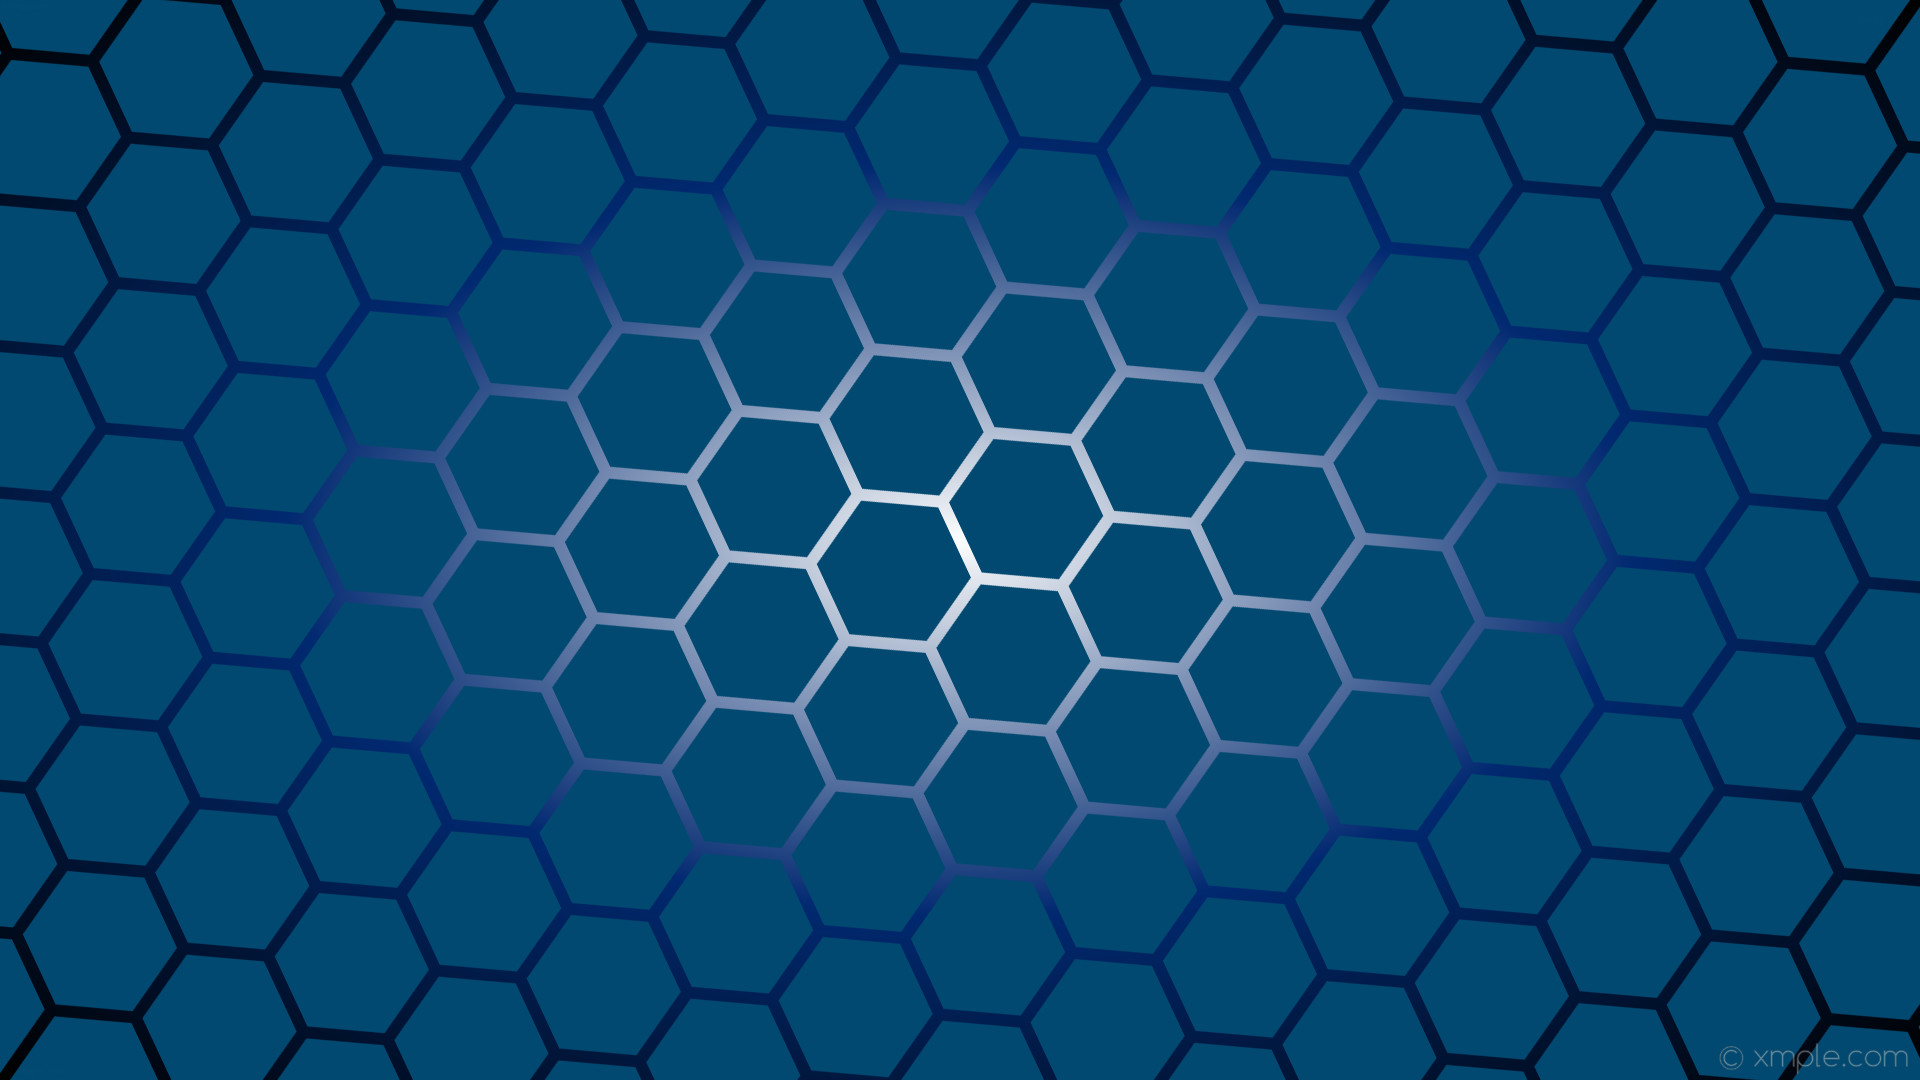 wallpaper gradient azure black hexagon glow white #014970 #ffffff #012870  diagonal 25Â°